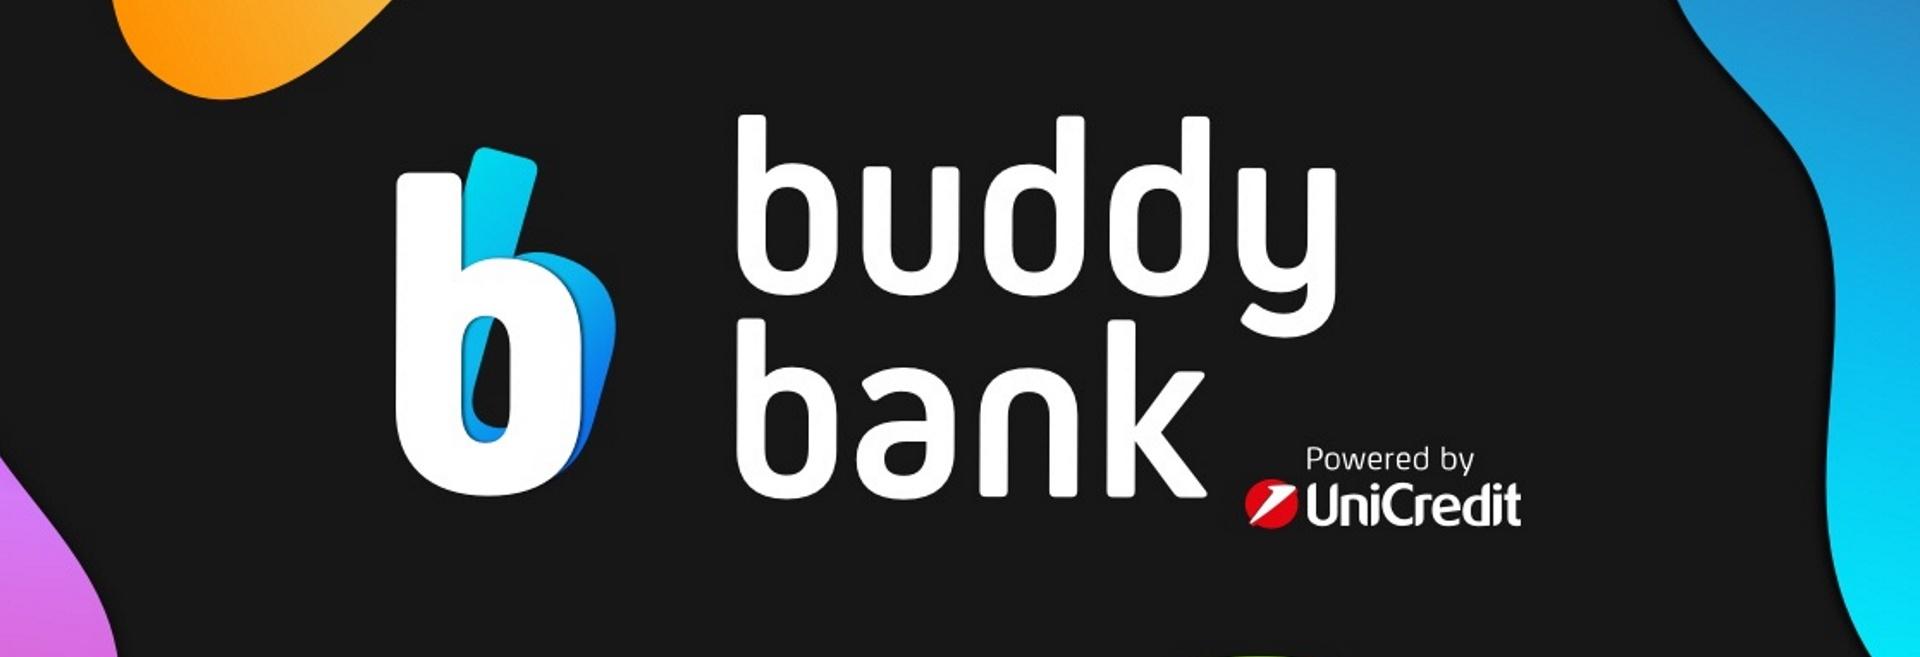 Buddybank colpisce ancora: soluzioni assicurative via app